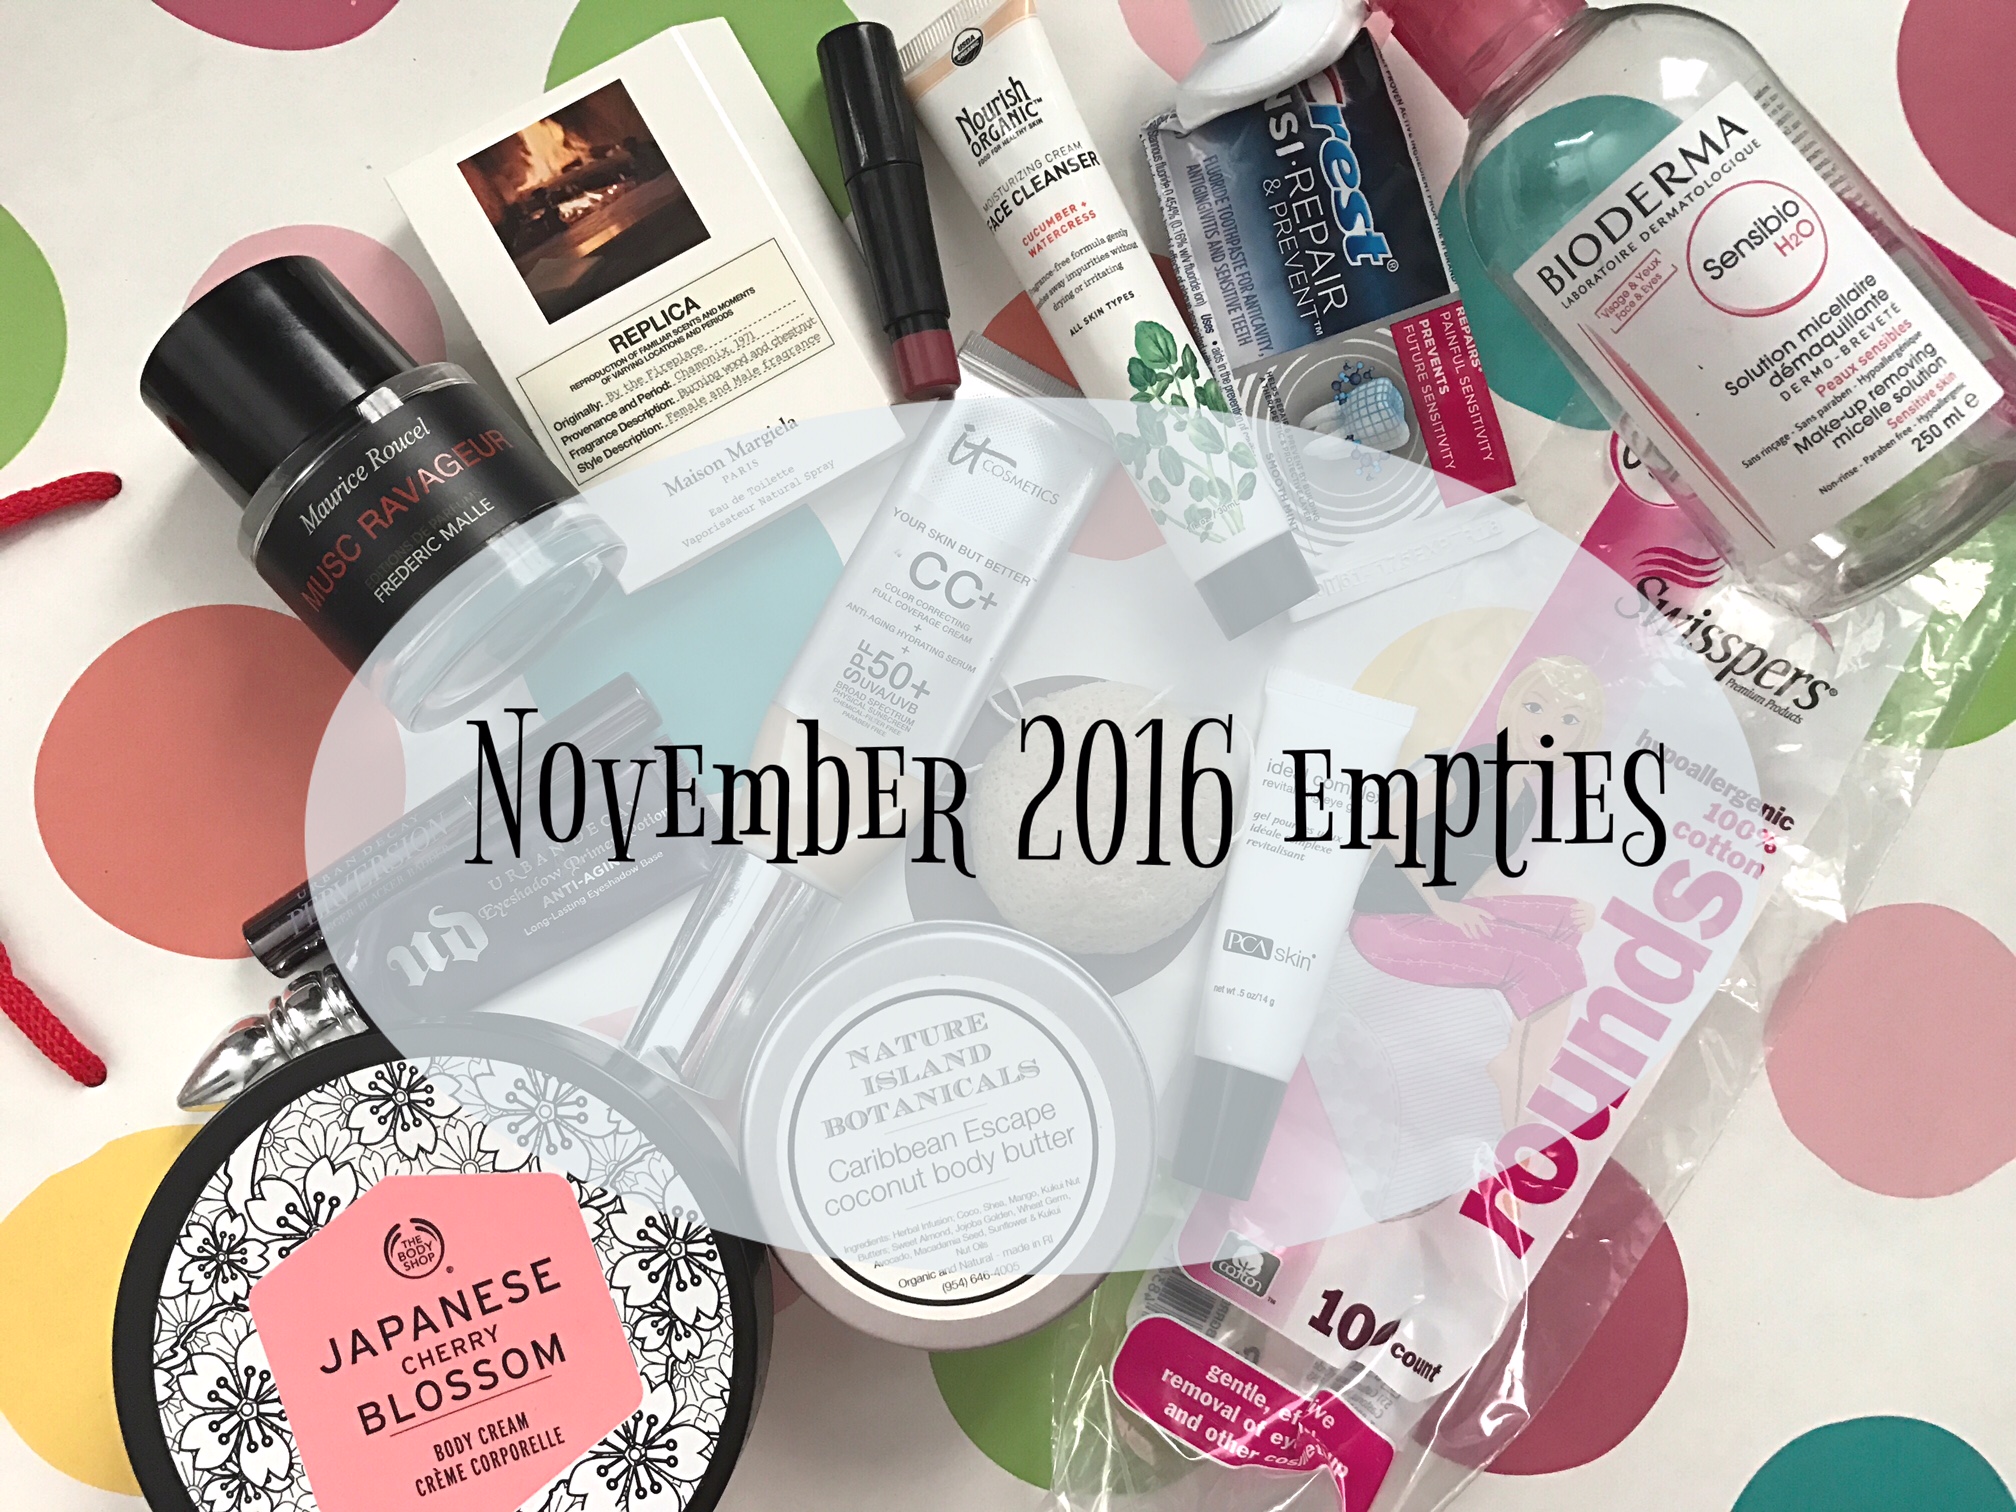 November 2016 beauty empties neversaydiebeauty.com